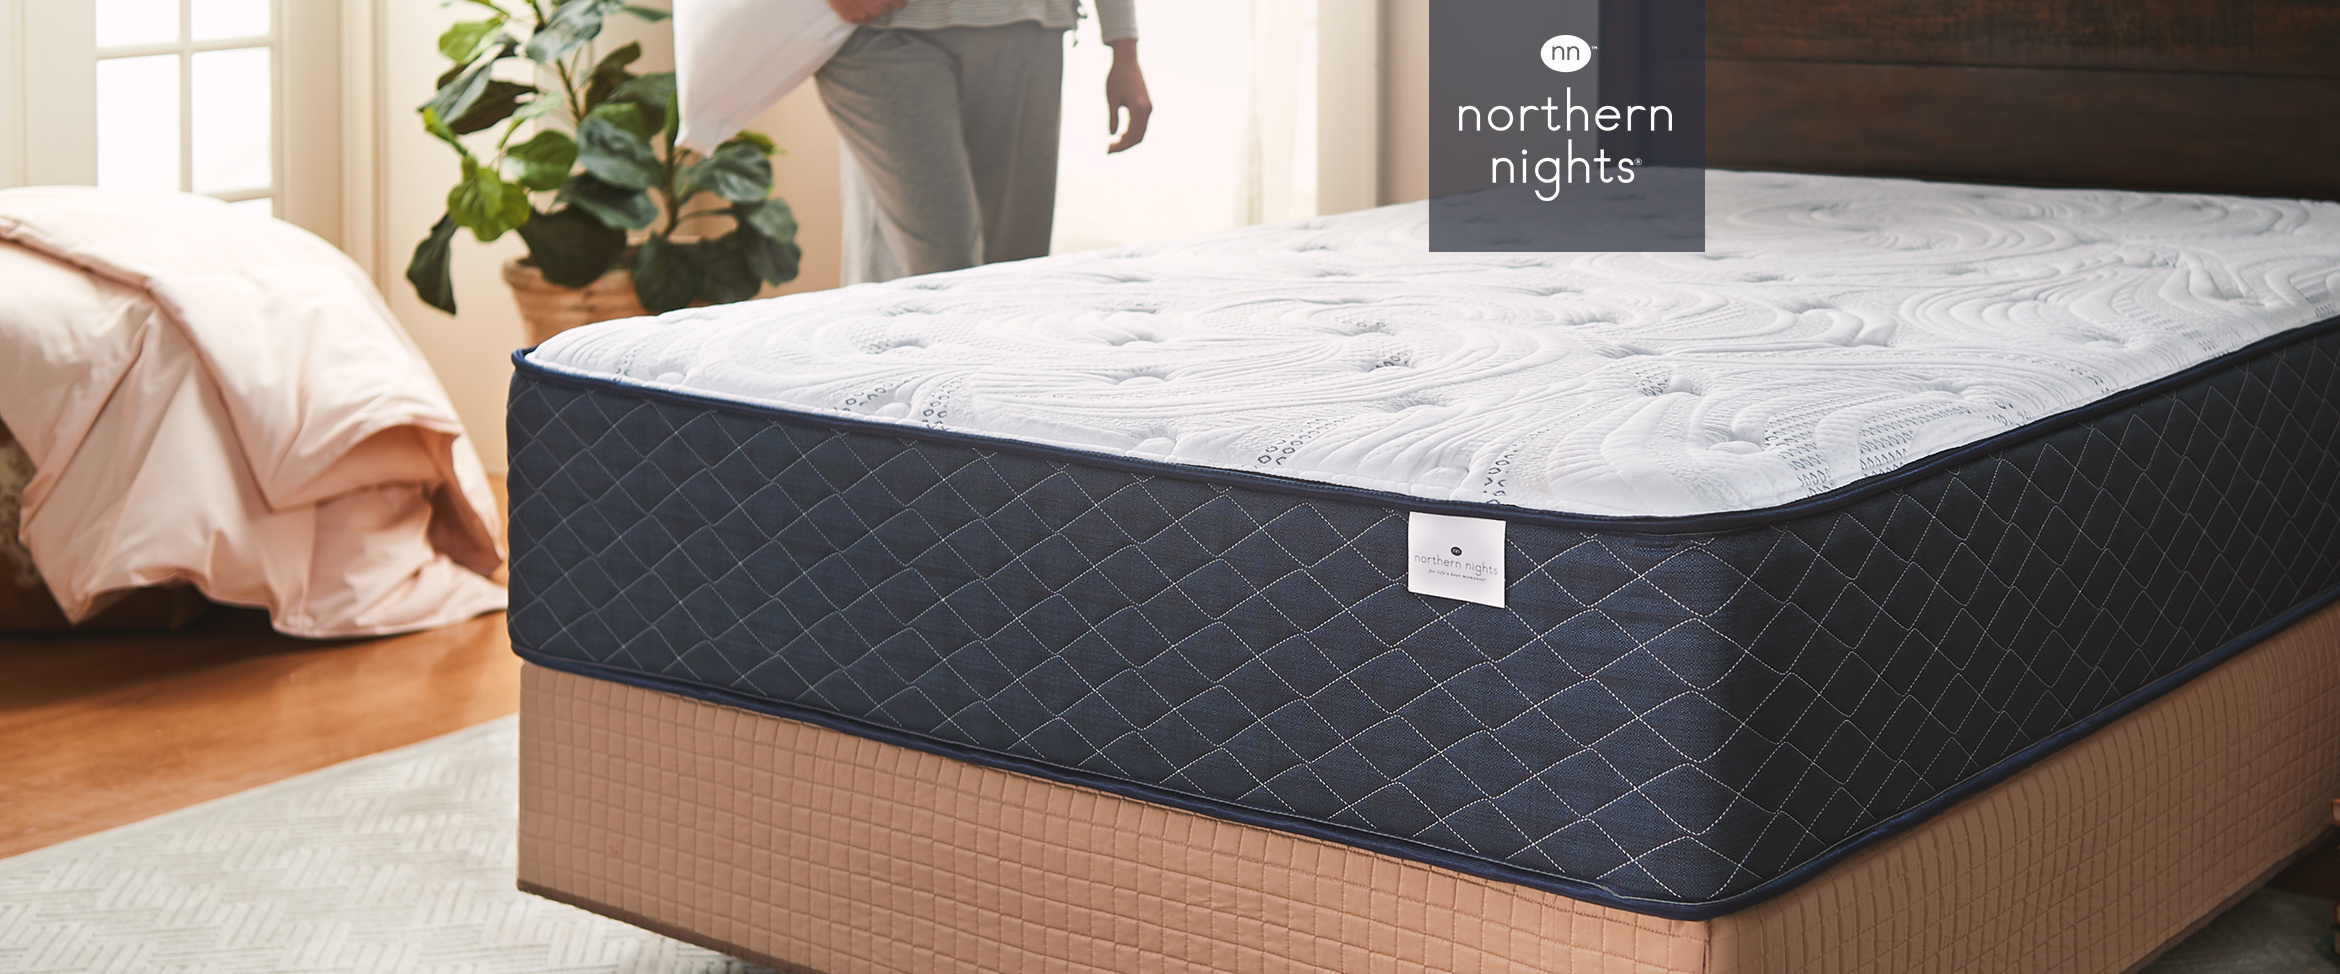 g northern nights mattress reviews